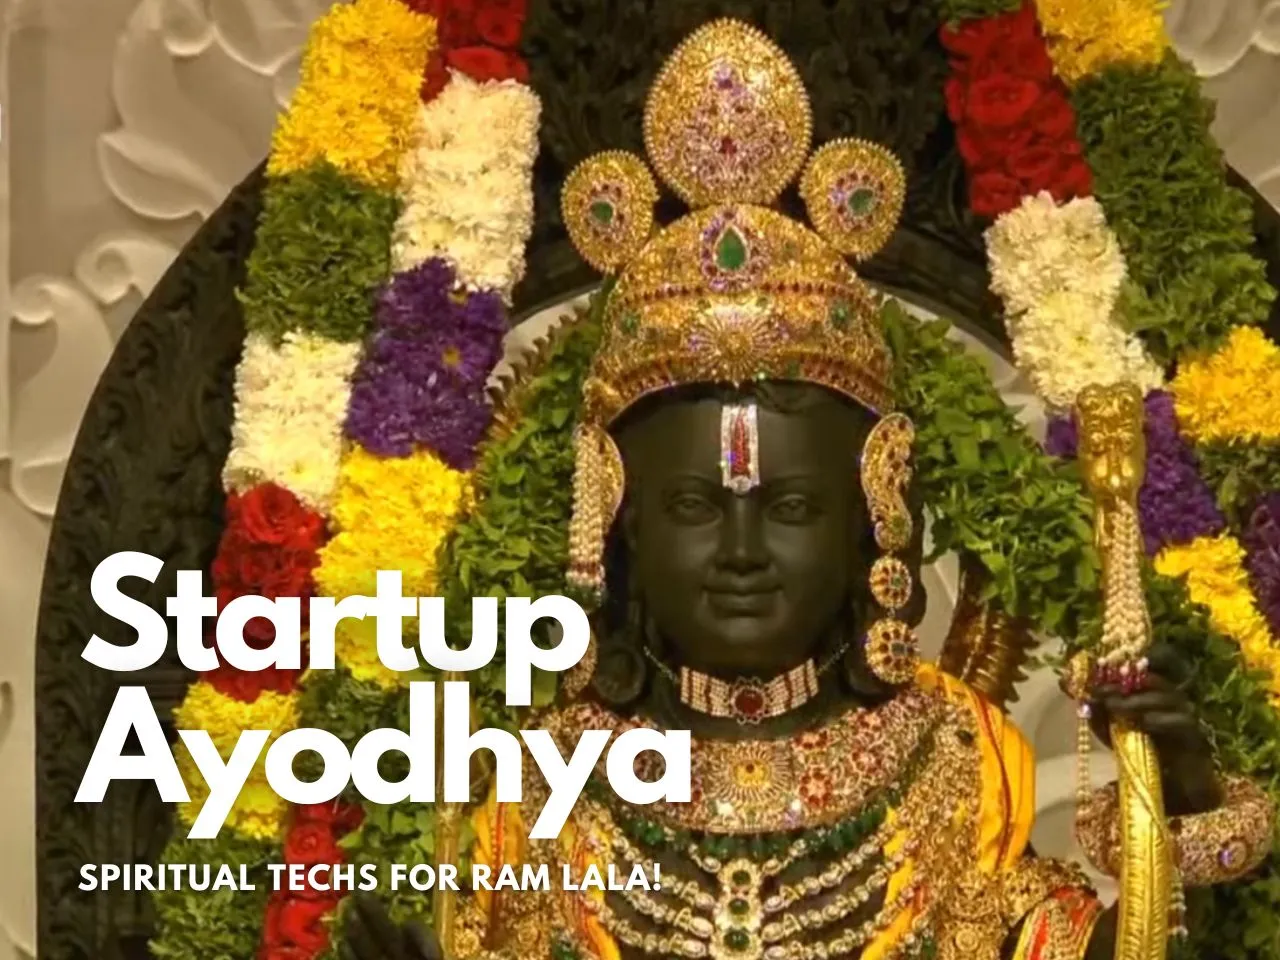 Startup Ayodhya